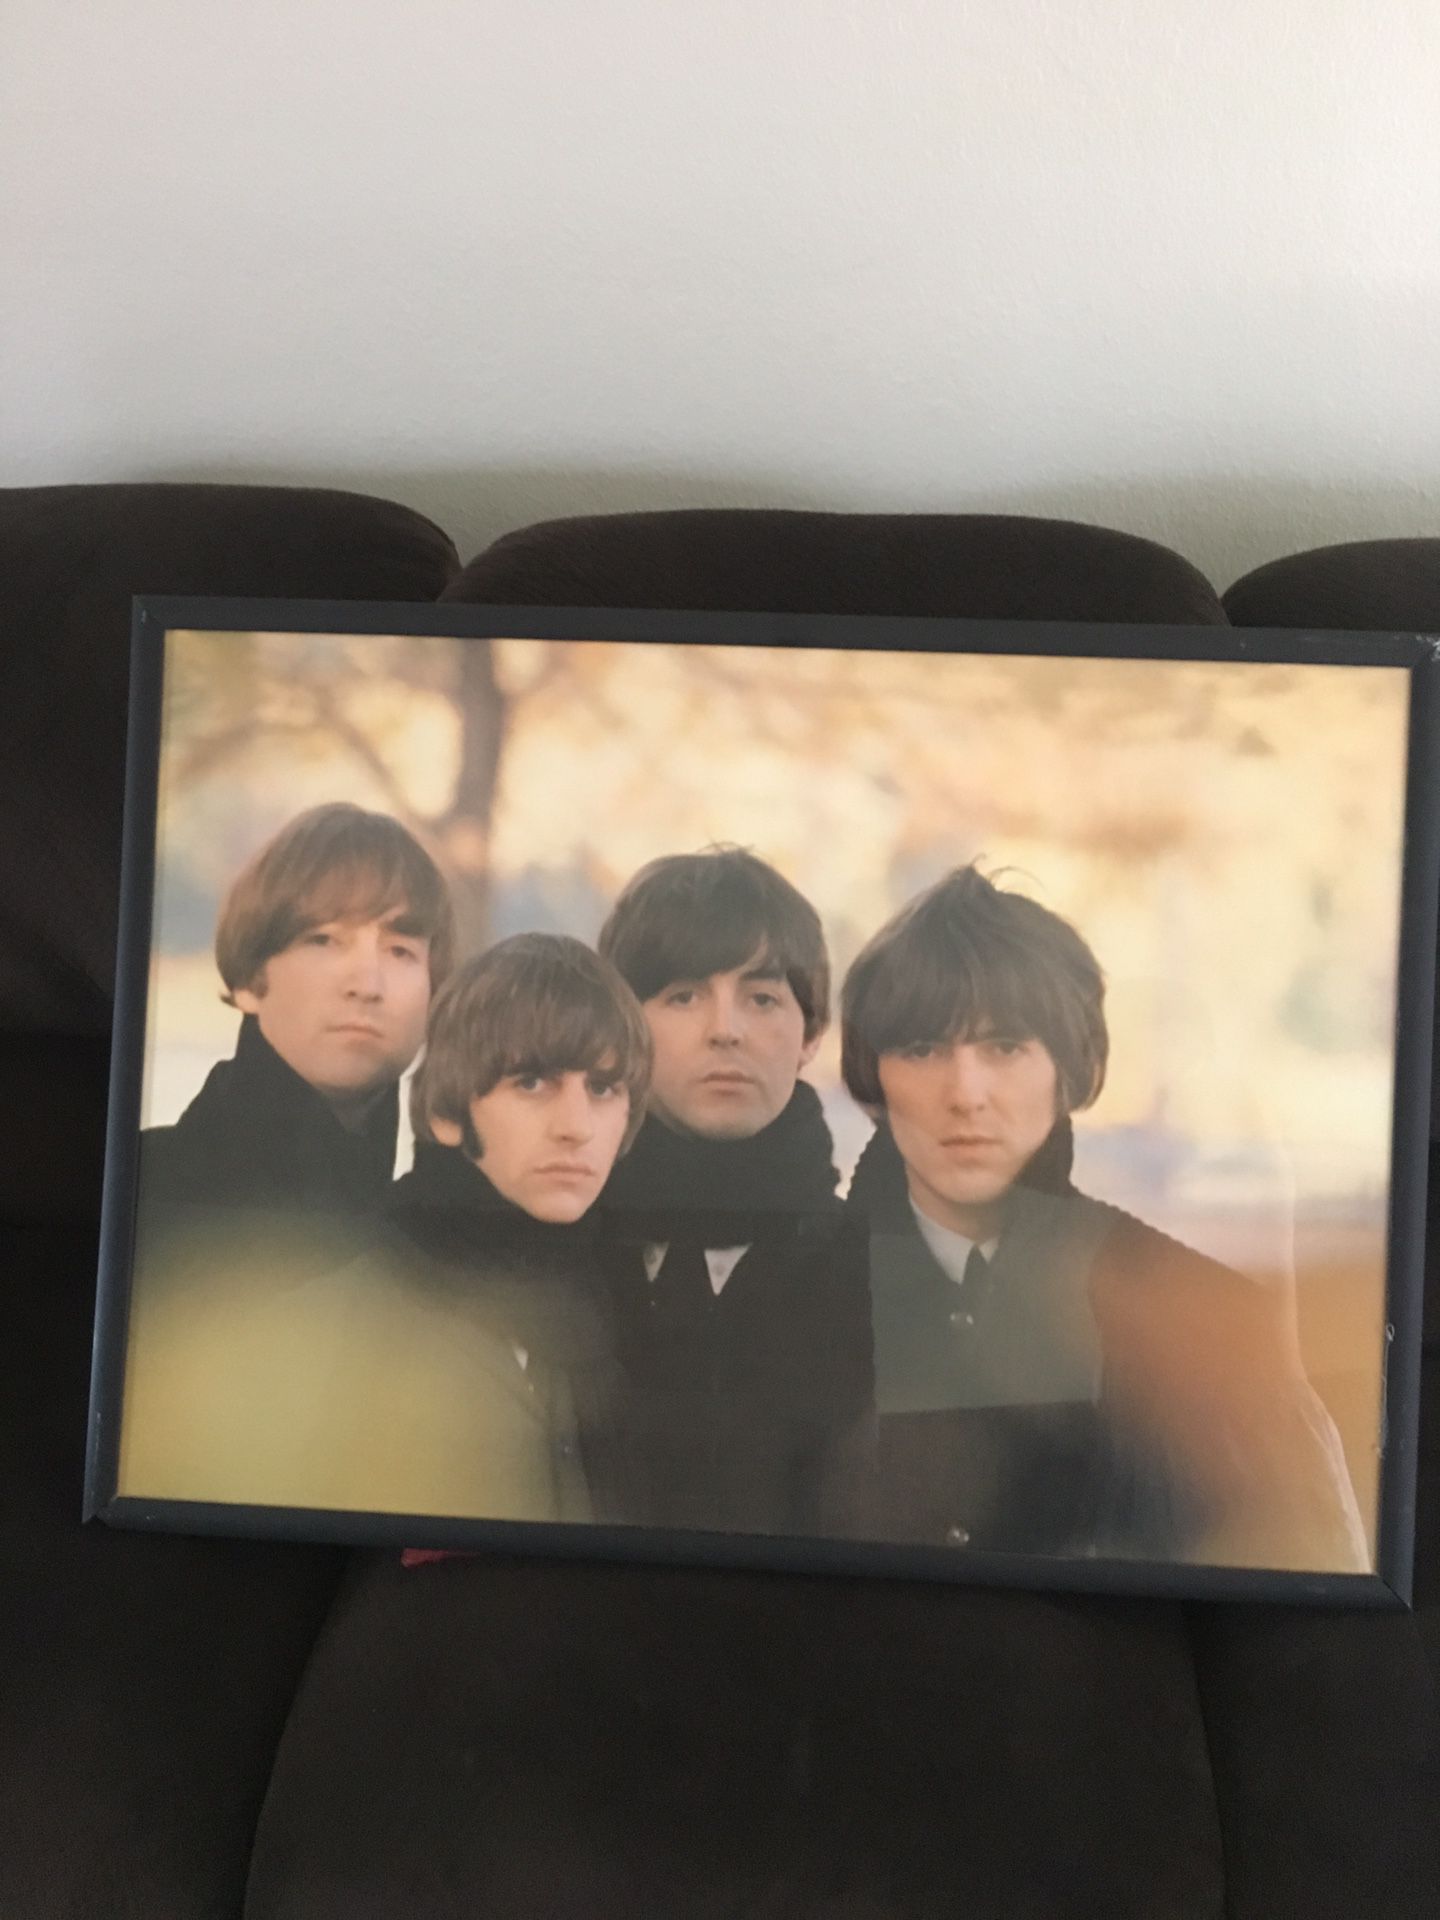 Beatles framed picture